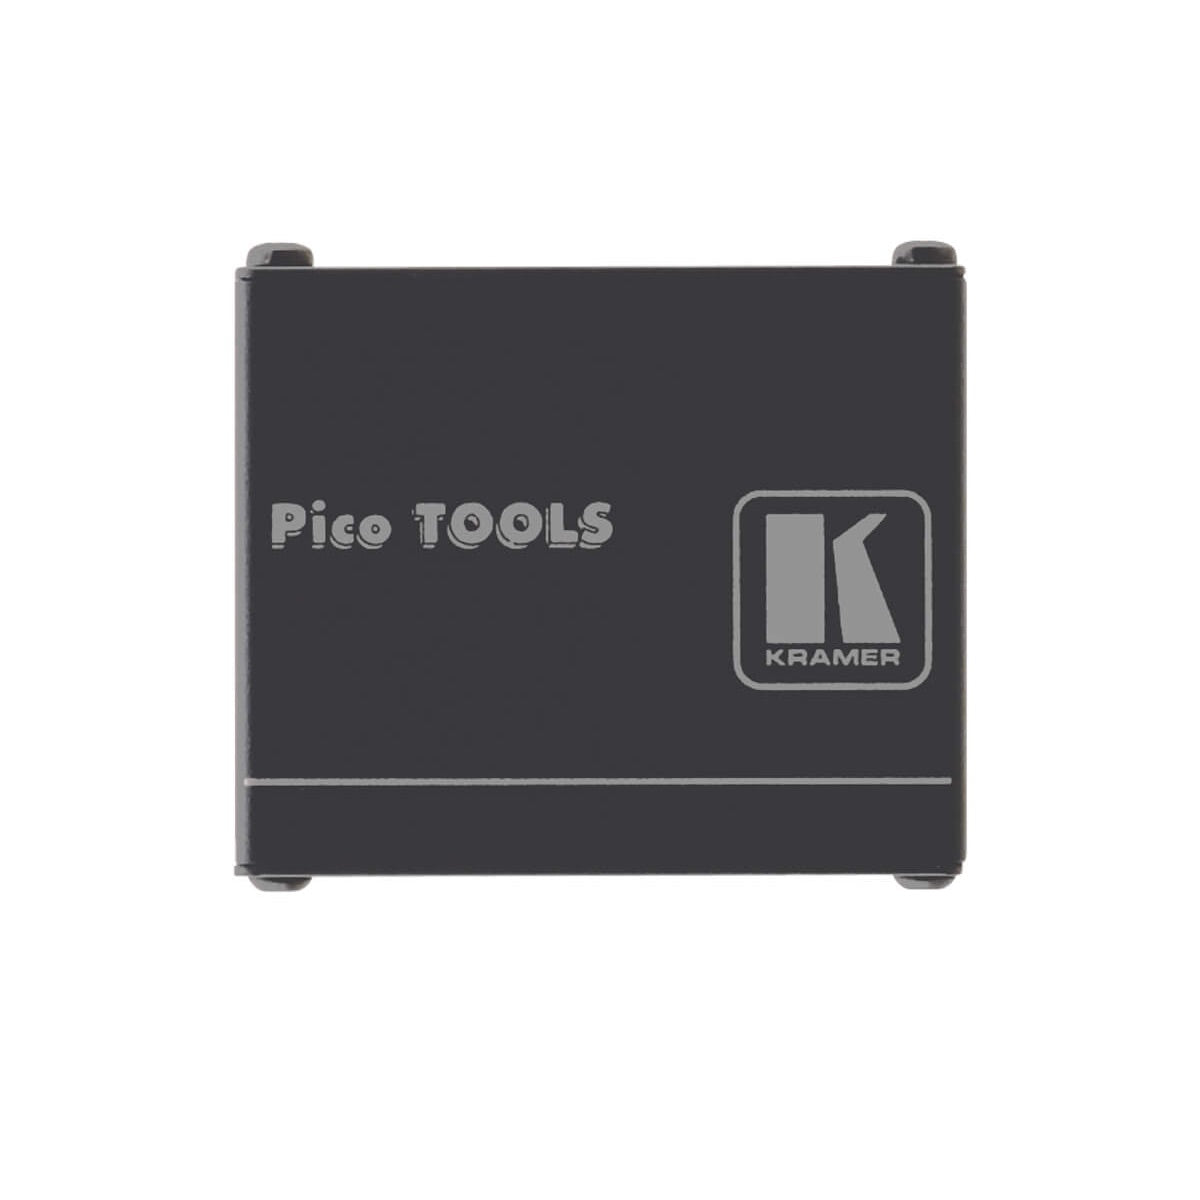 Kramer PT-1C - EDID Processor for HDMI Signals